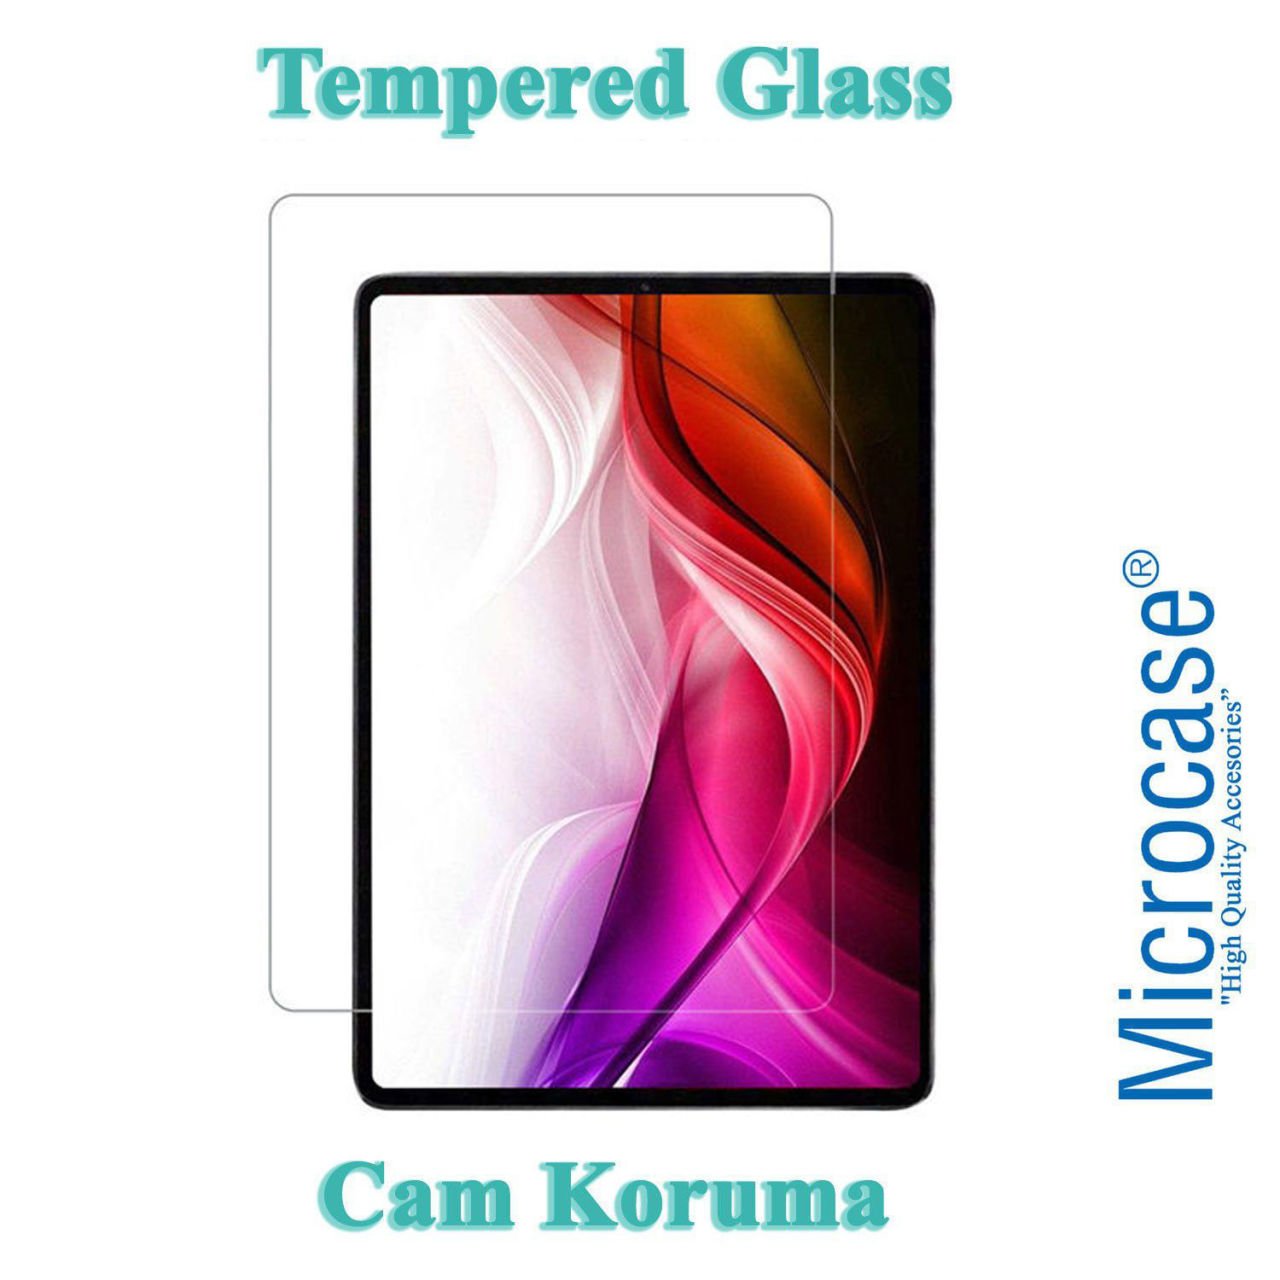 Microcase iPad Pro 11 Tempered Glass Cam Koruma